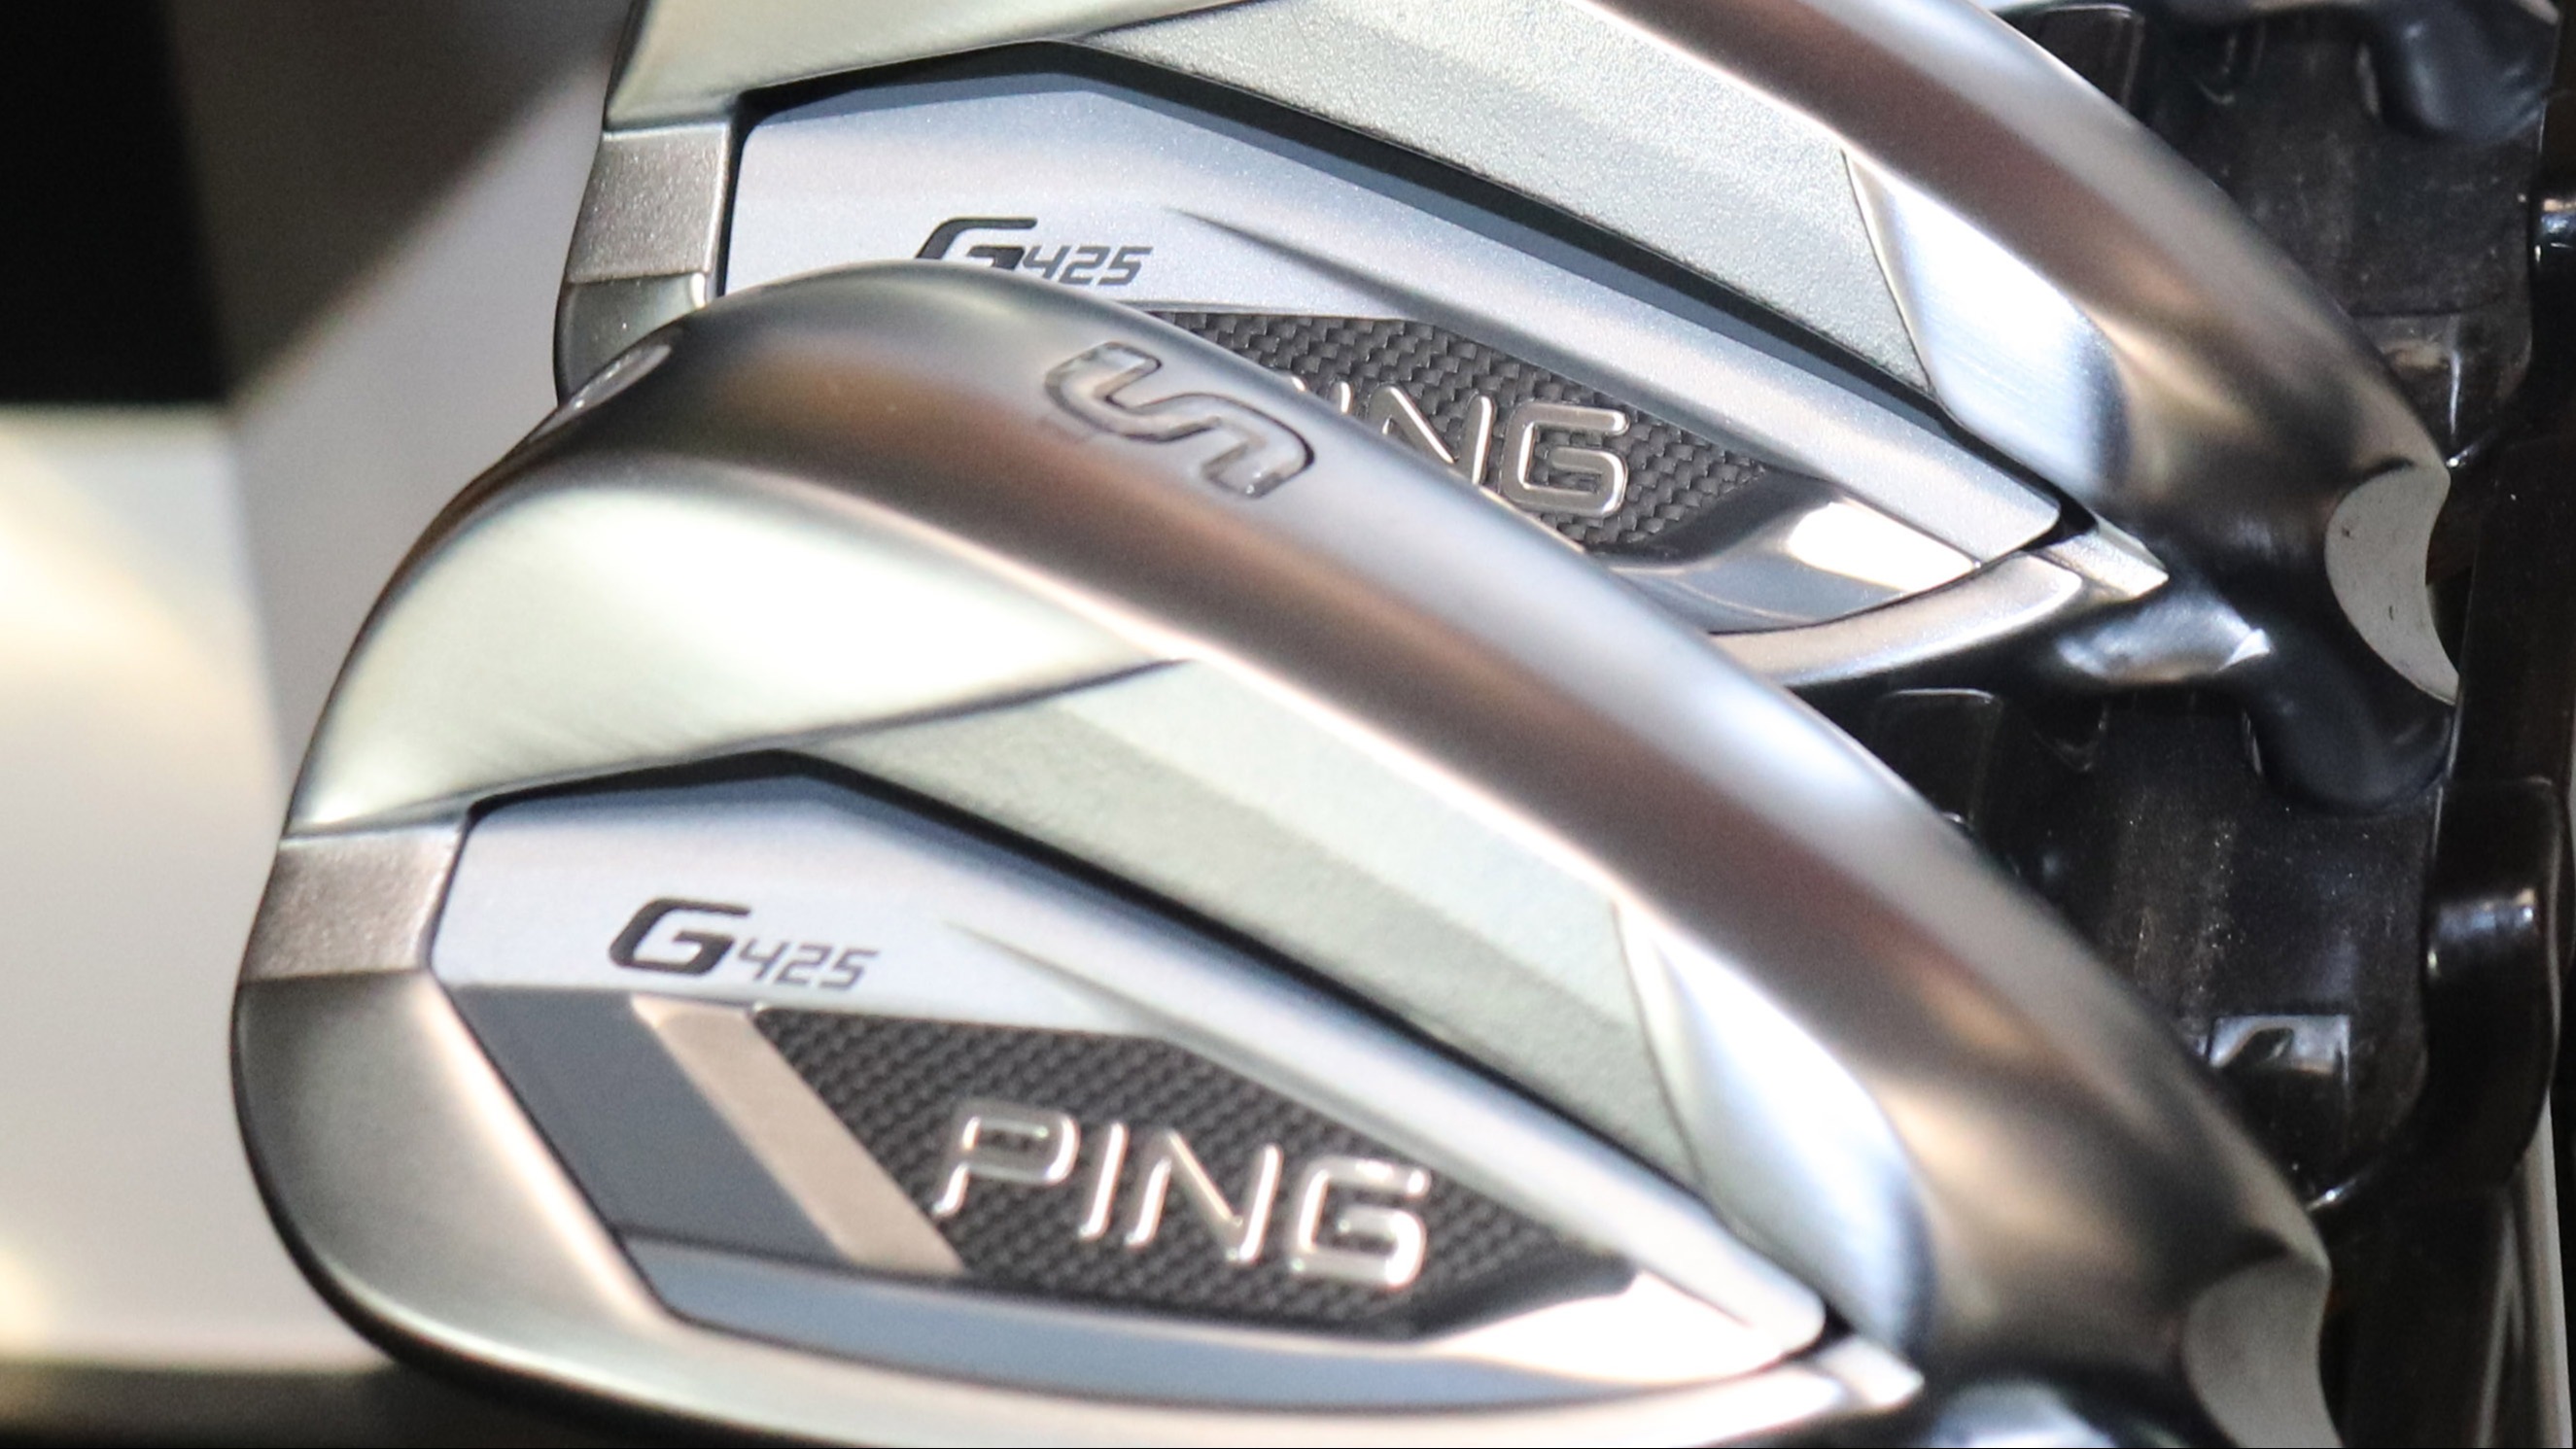 Ping G425 irons